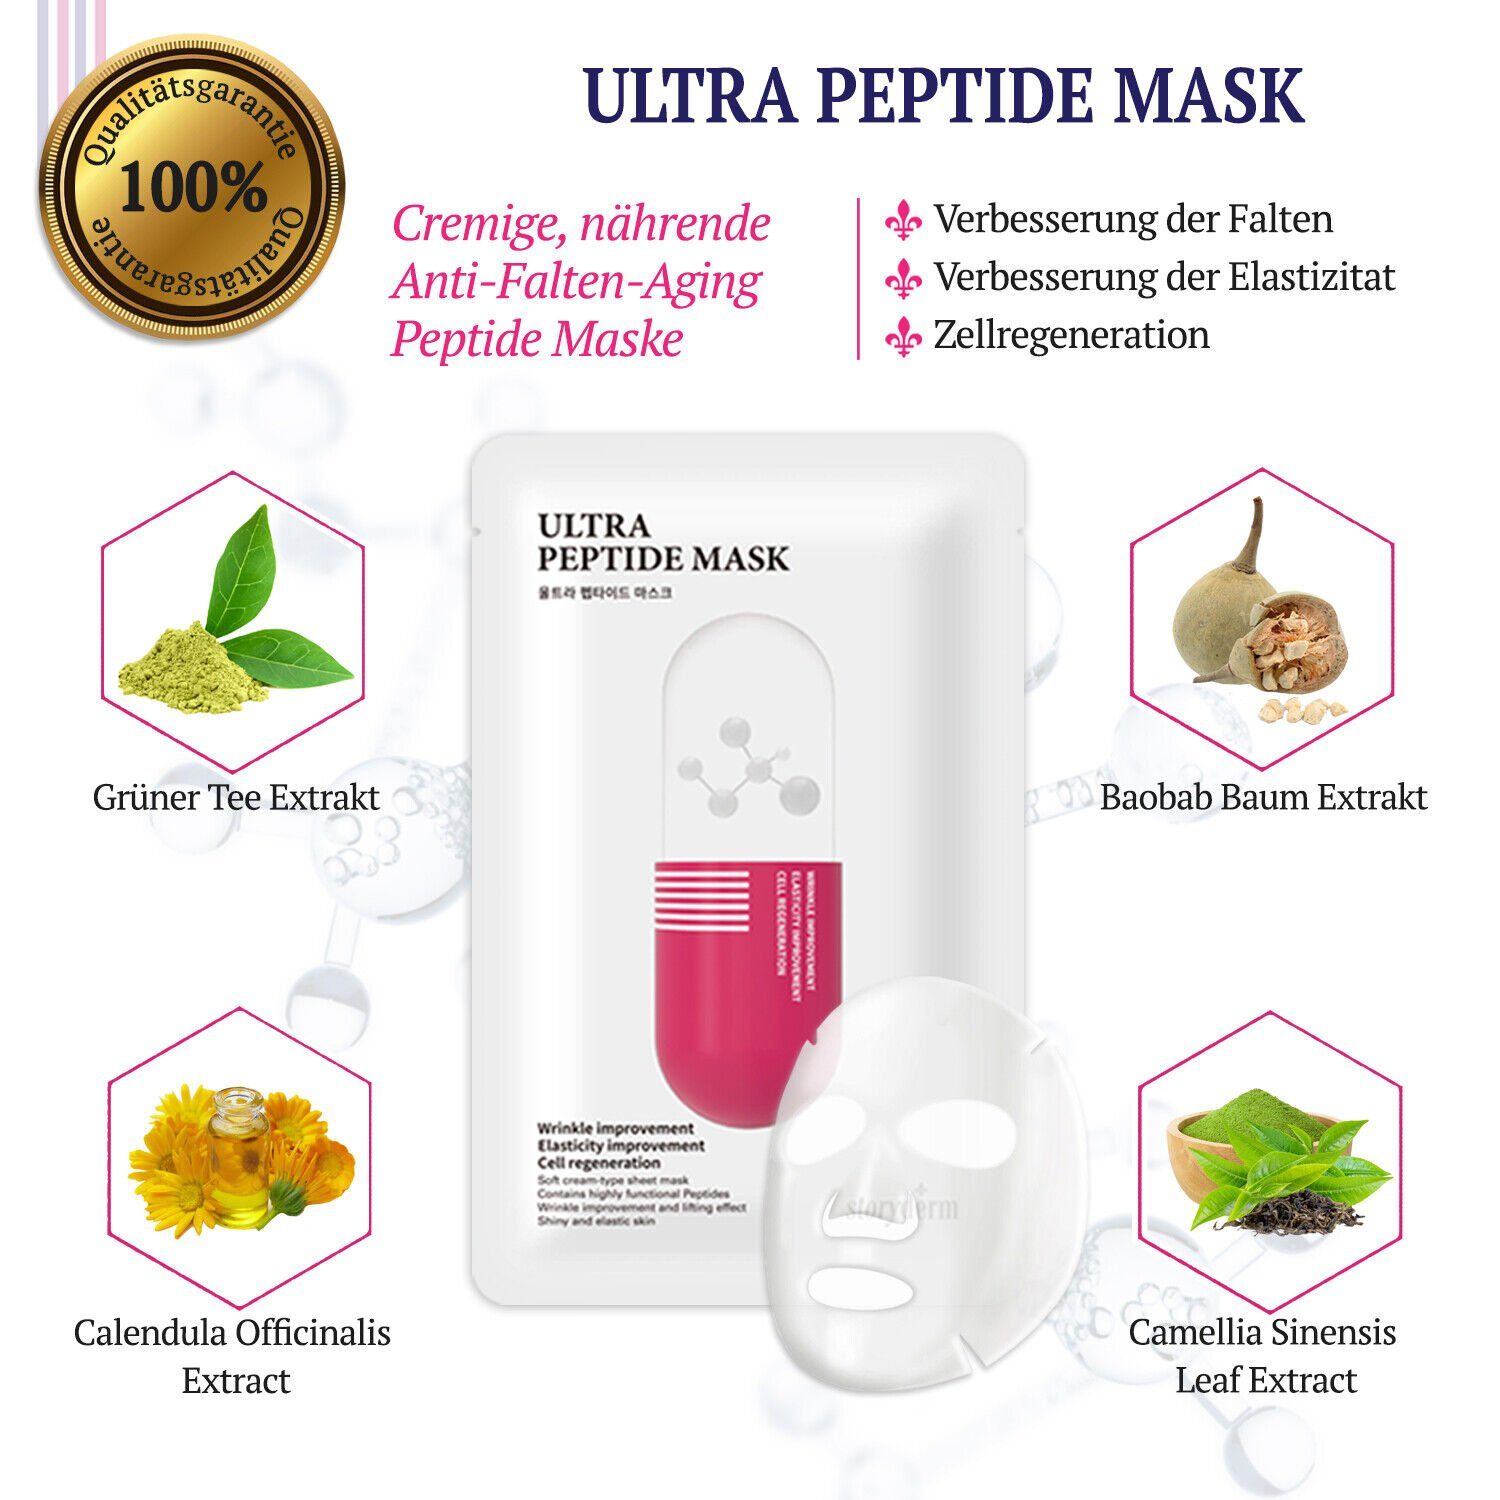 1-tlg. aus Storyderm Gesichtsmaske Pflege NEUHEIT peptide, ultra Gesichtsmaske Tuchmaske Premium Korea Storyderm